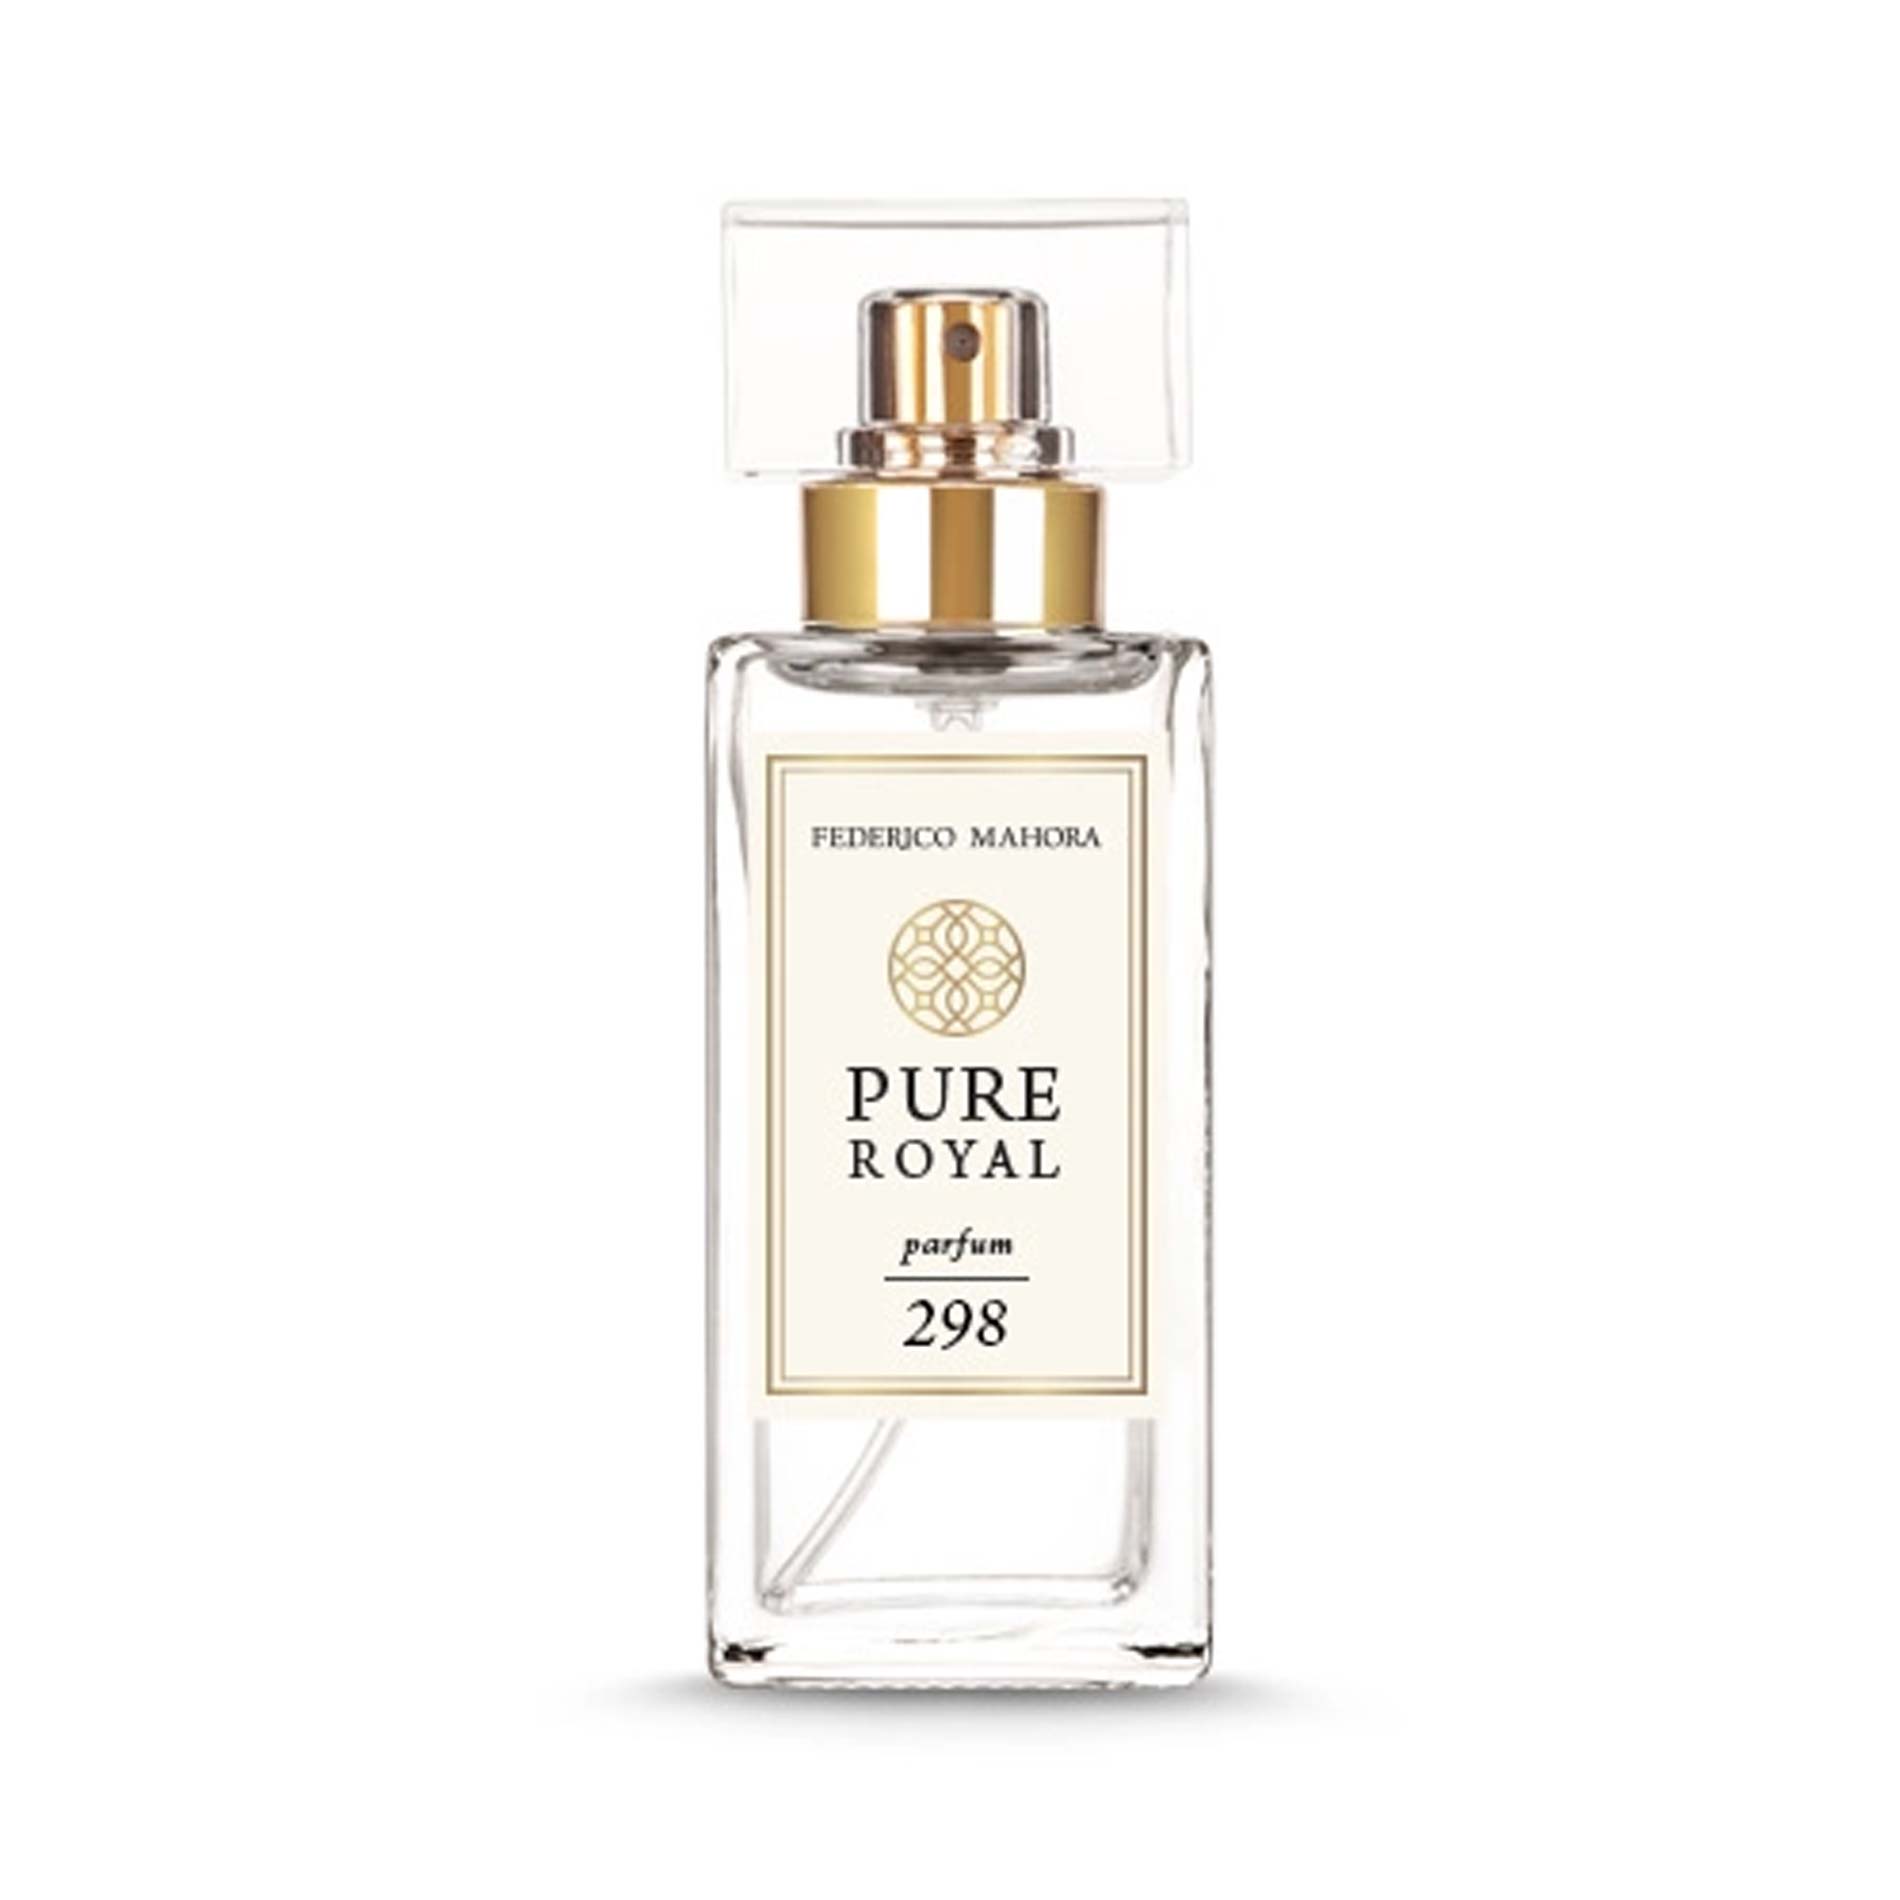 Pure Royal 298 Parfum Federico Mahora